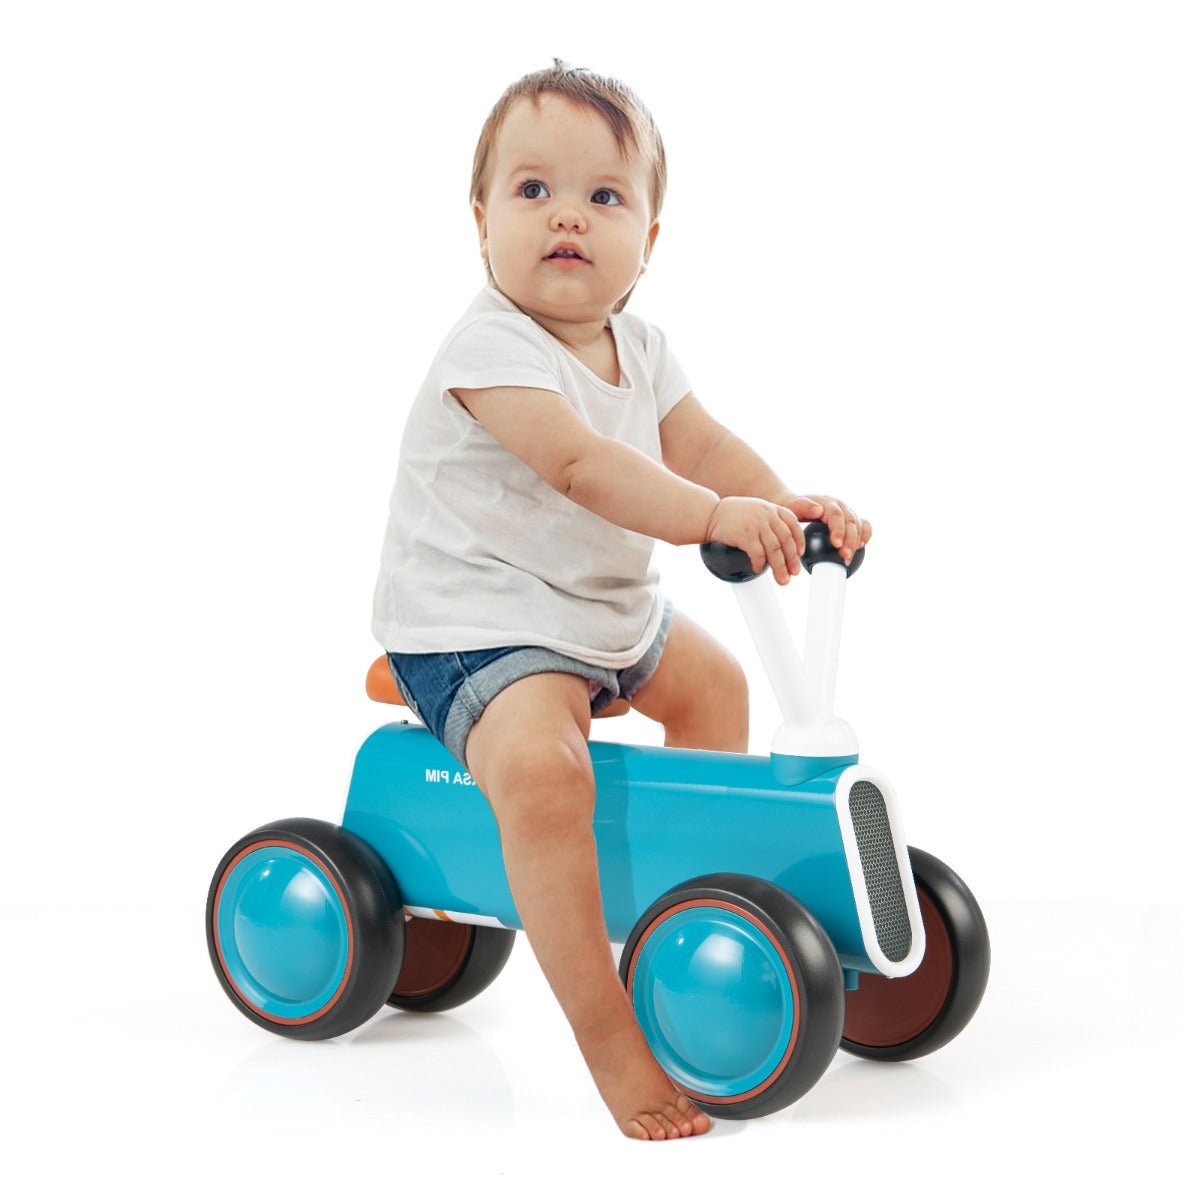 Pedal-Free Baby Bike - Encourage Motor Skills in Toddlers